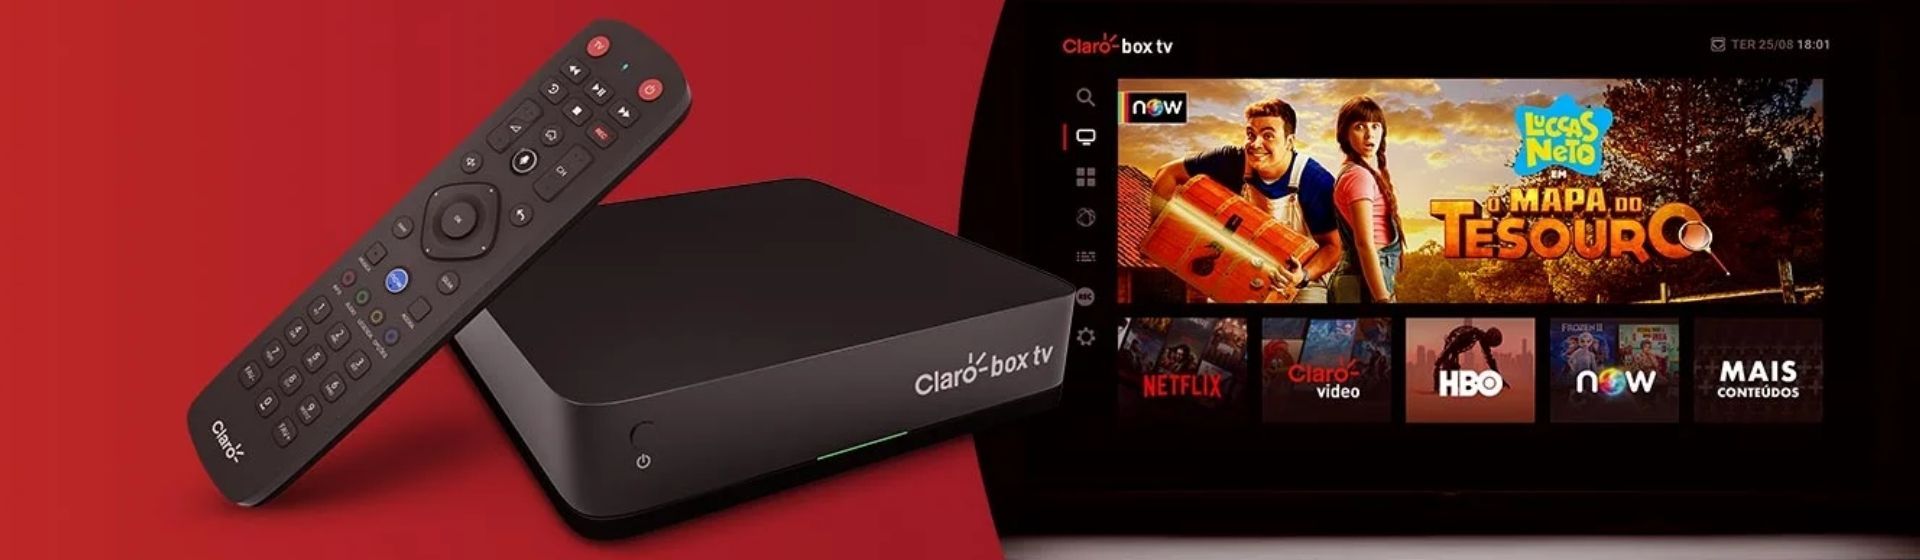 Capa do post: Claro Box TV: confira nova plataforma de streaming e TV da operadora